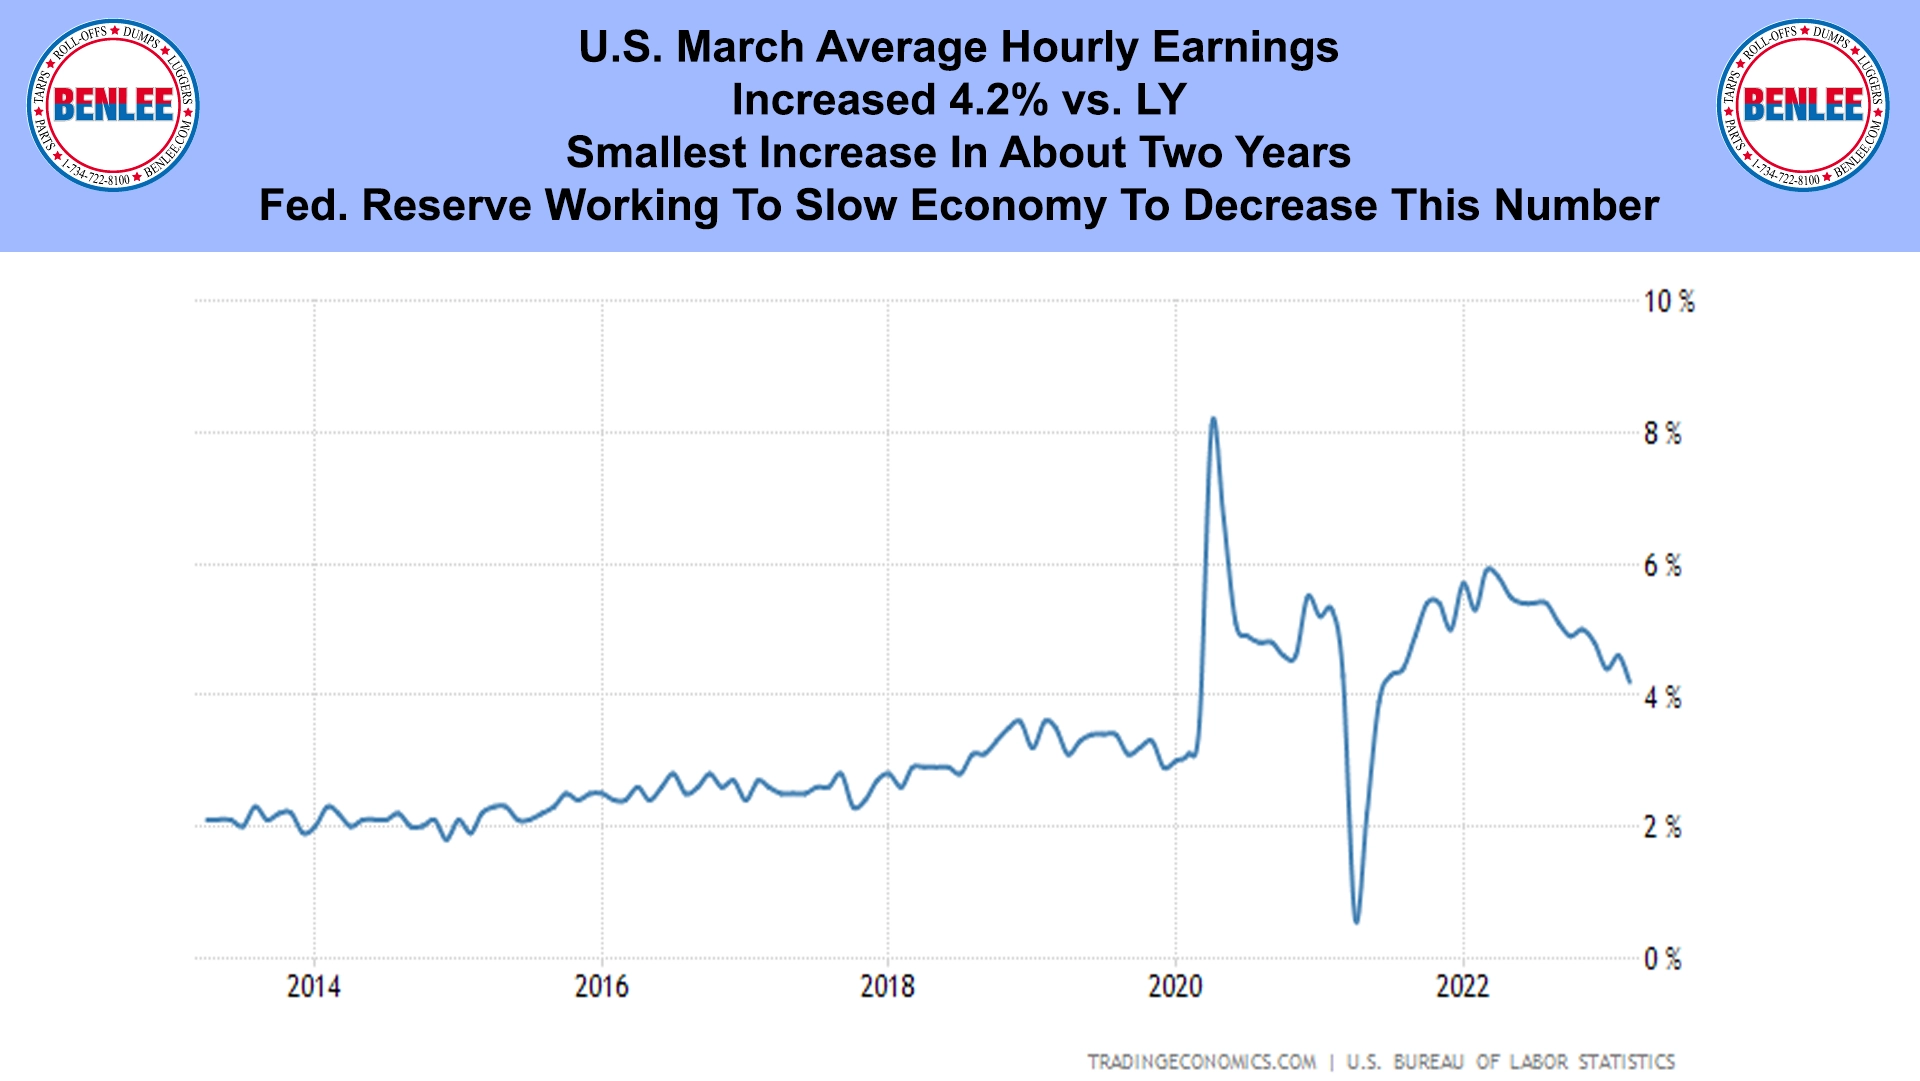 U.S. March Average Hourly Earnings